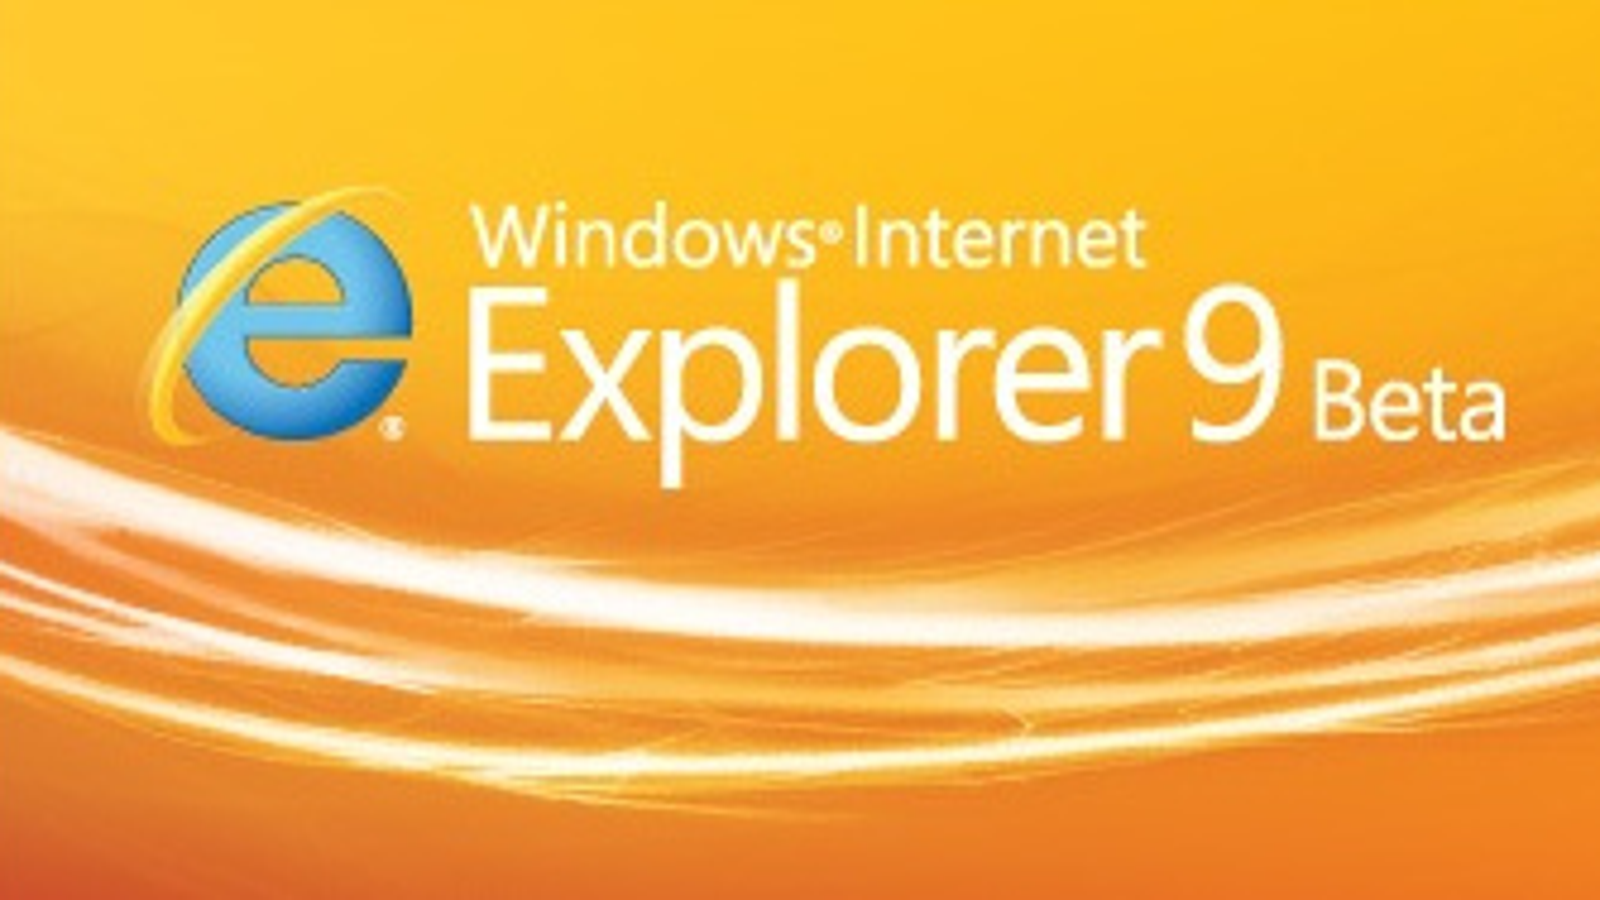 can you download internet explorer on macbook